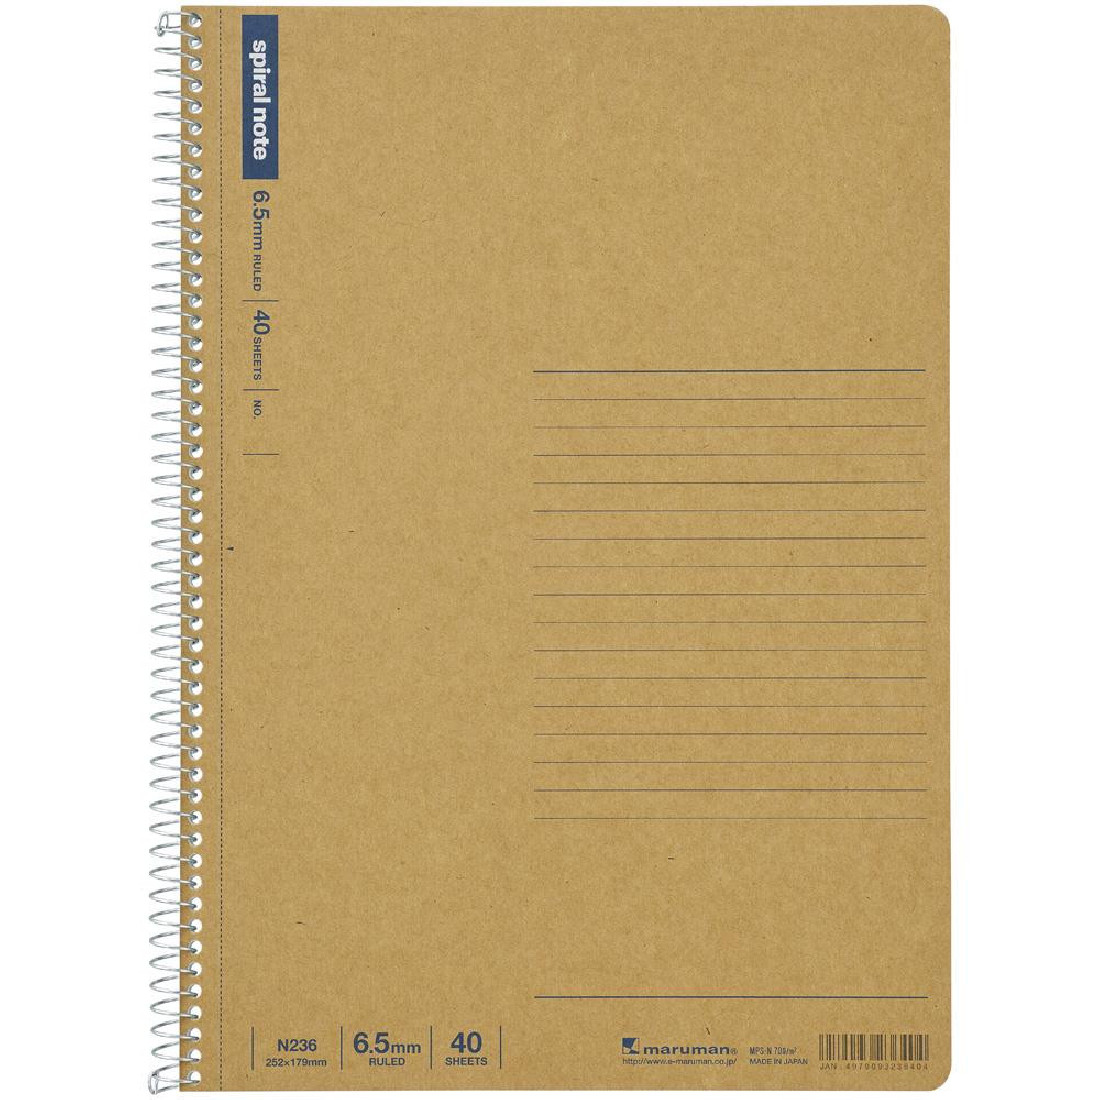 Maruman B5 spiral notebook ruled paper 40 sheets N236